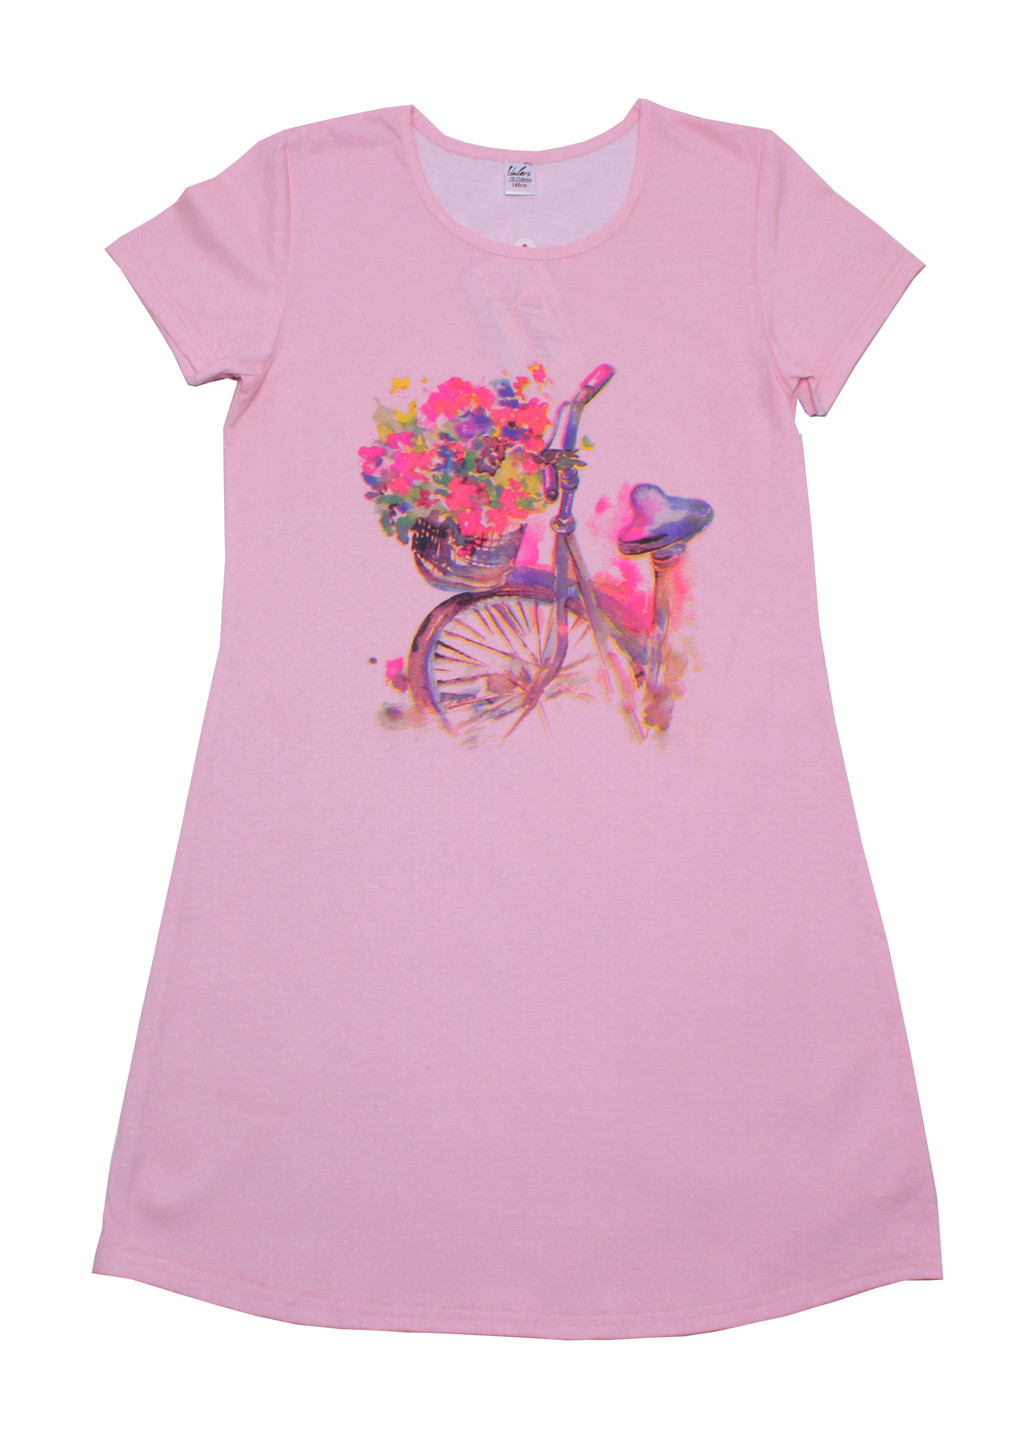 Ночная рубашка Валери-Текс с коротким рукавом рисунок розовая домашняя